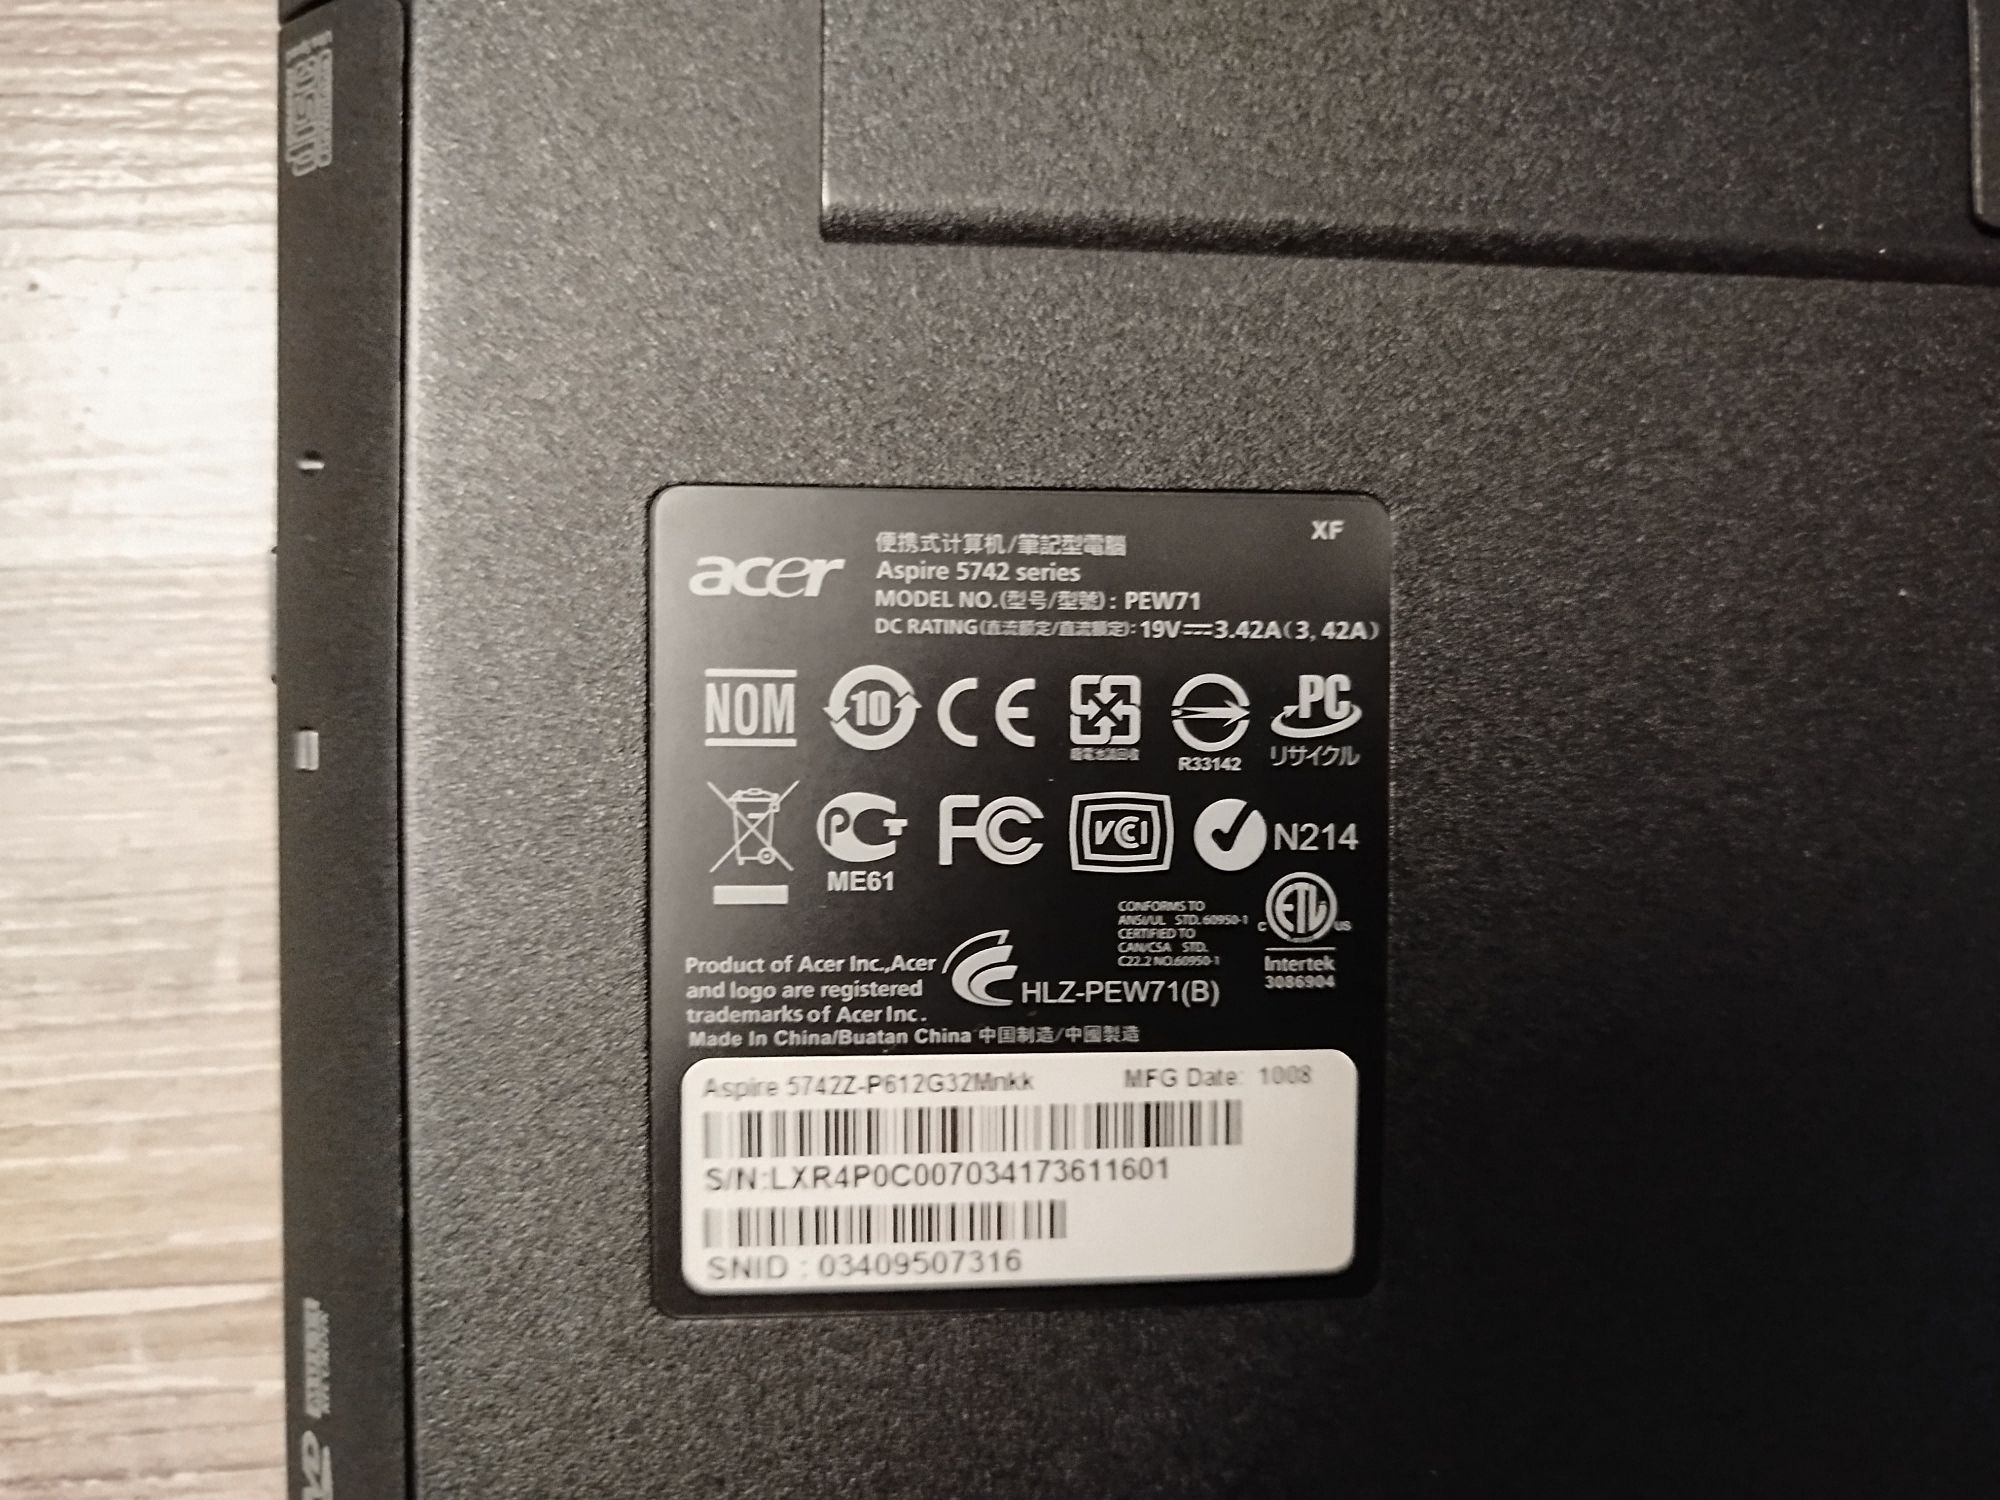 Laptop Acer Aspire 5742